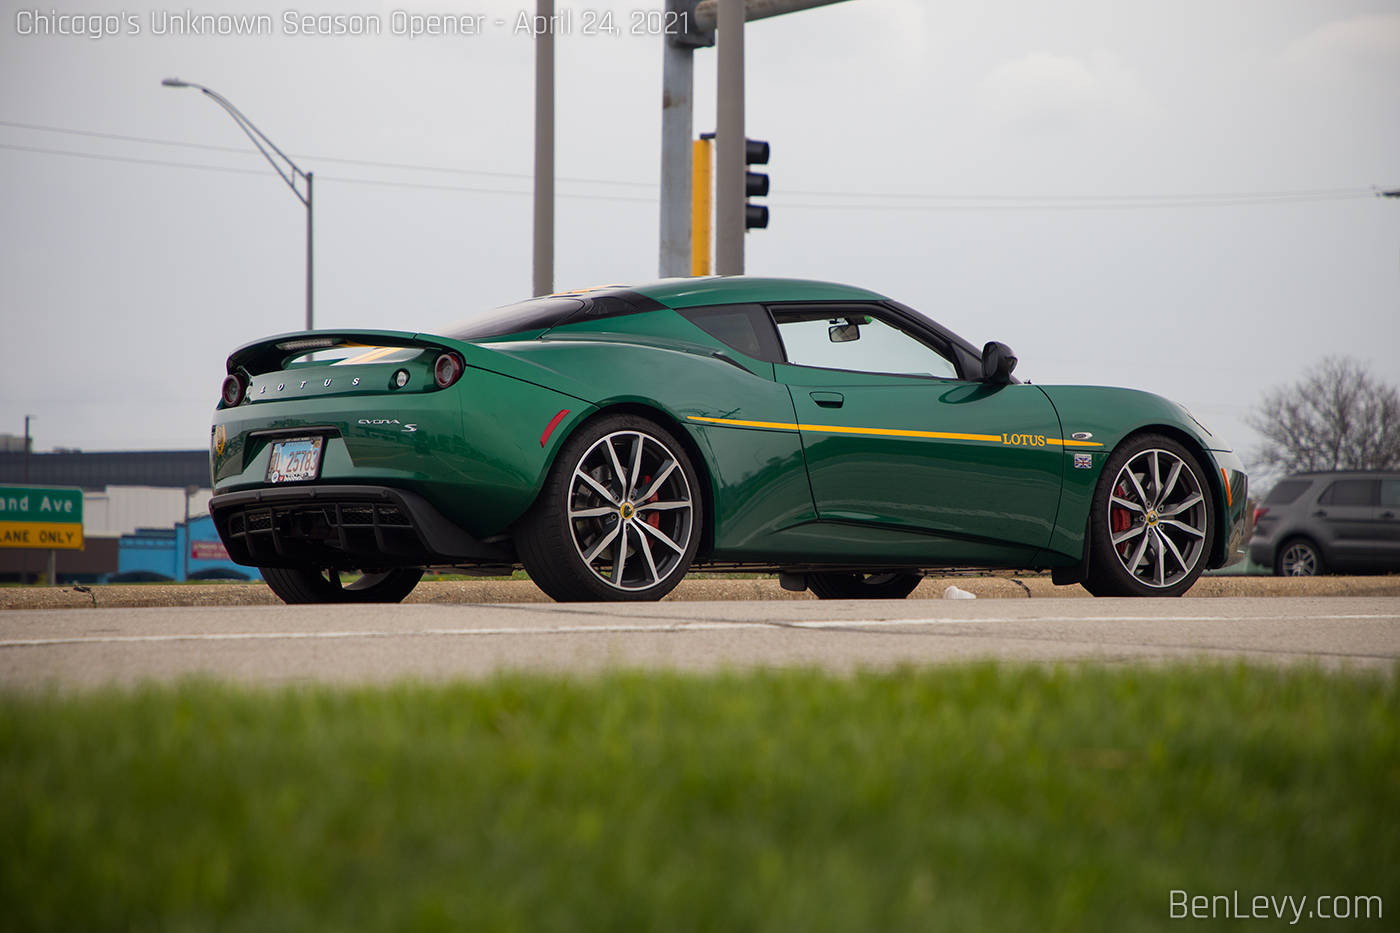 Green Lotus Evora S Leaving Car Meet